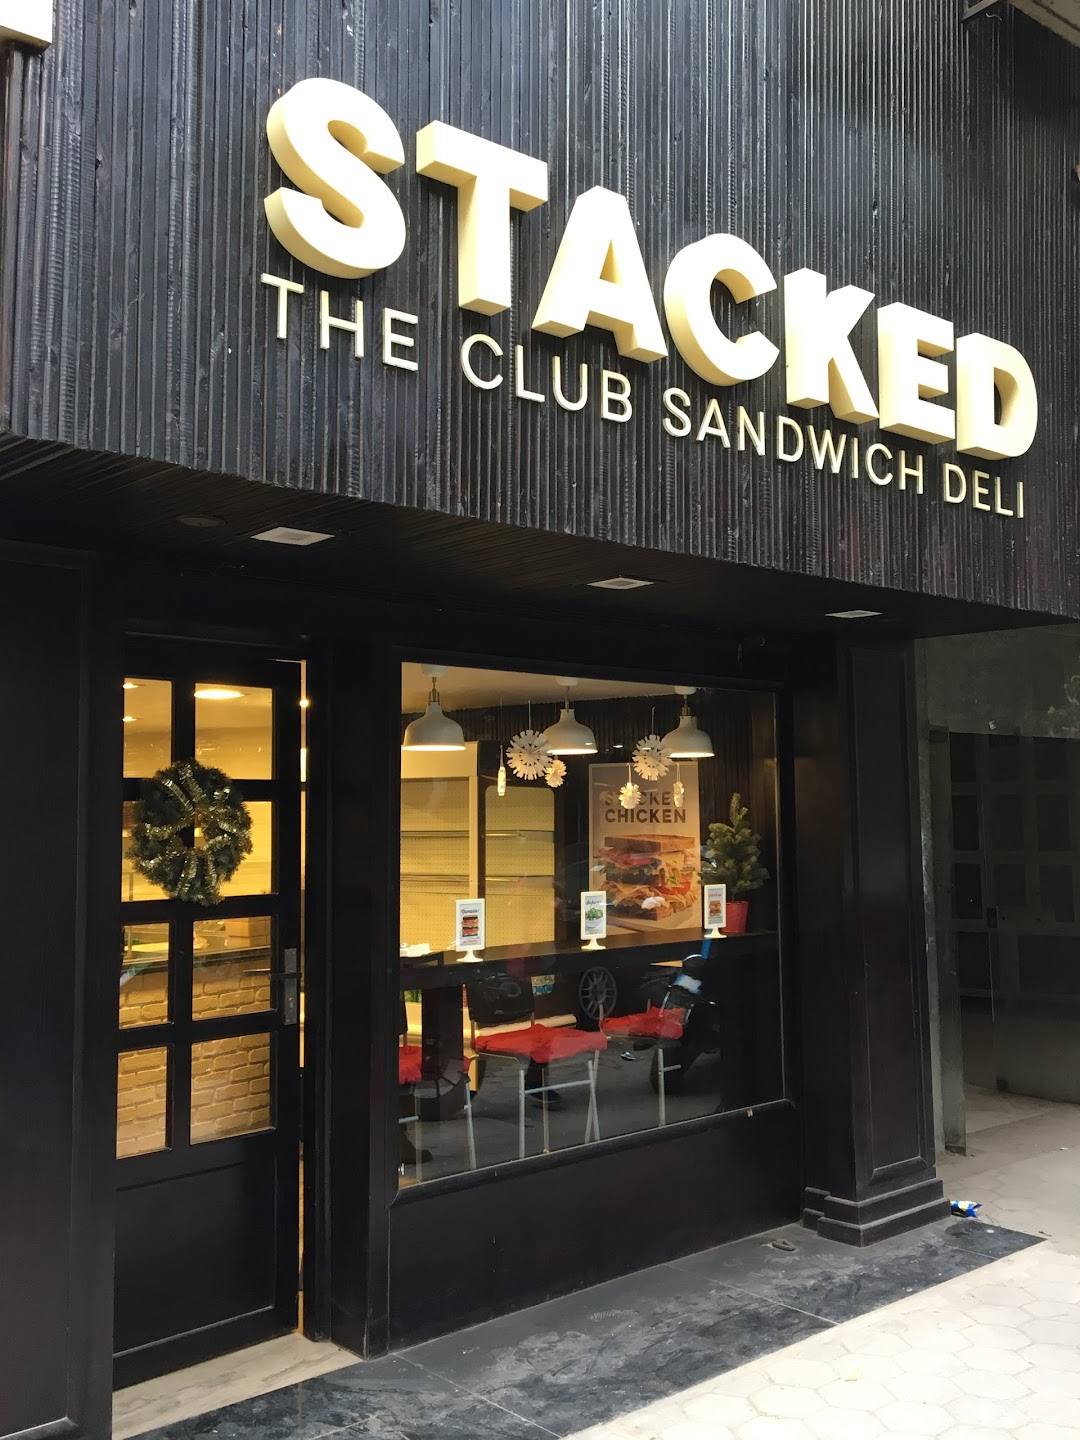 Stacked - The Club Sandwich Deli